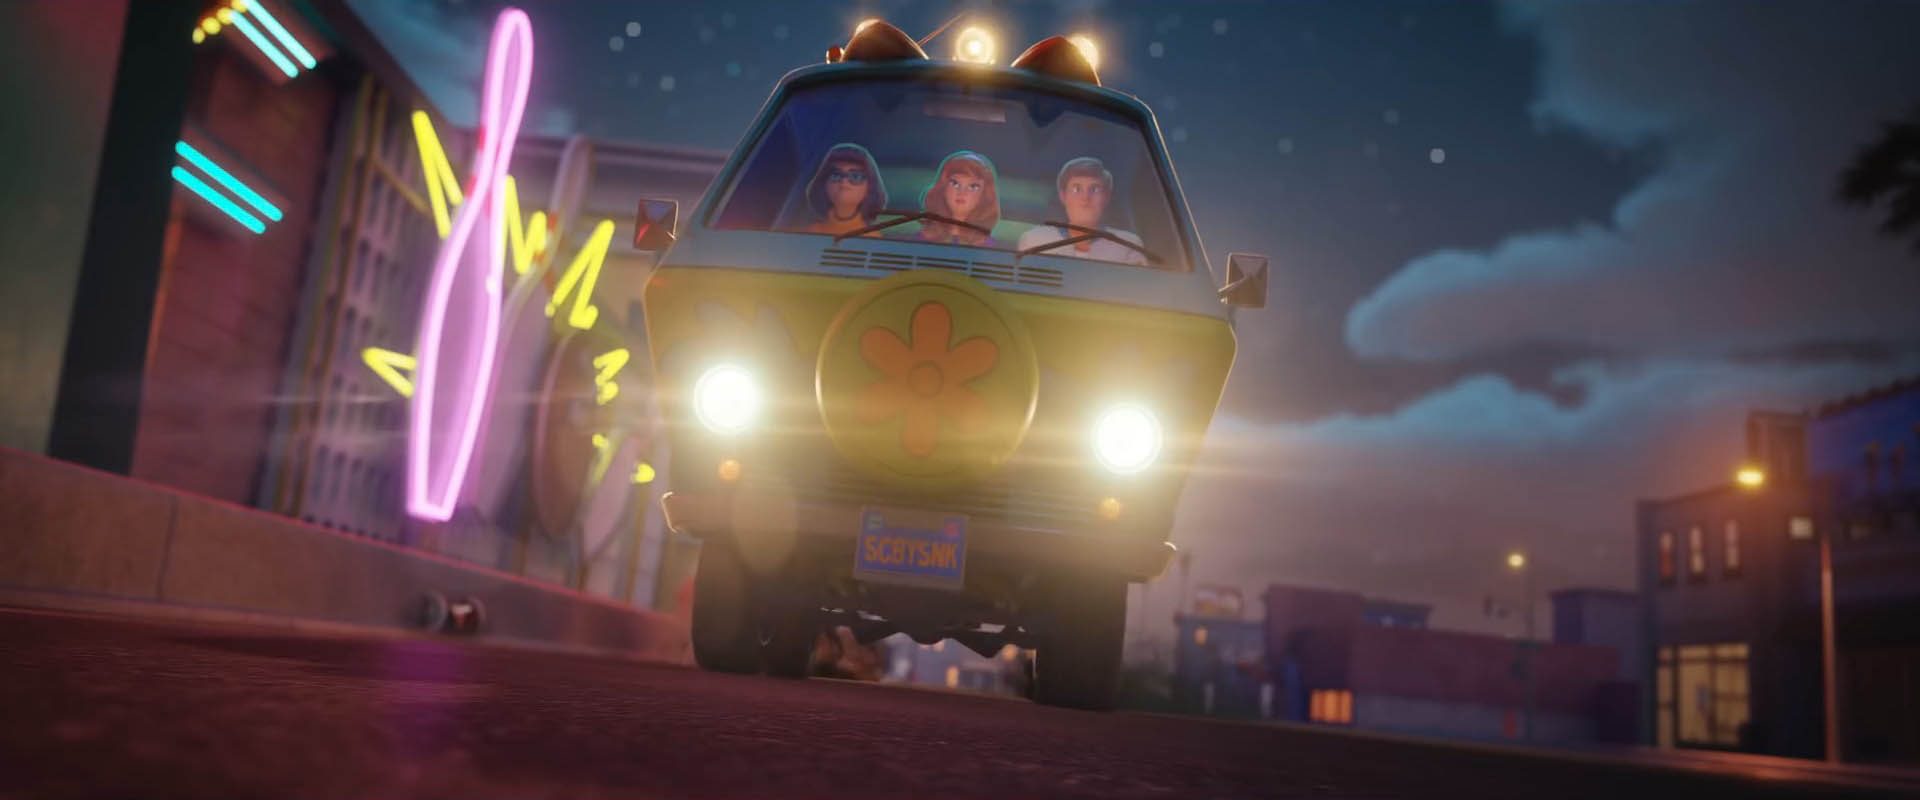 Scoob trailer - Scooby Doo gets an origin story | The Nerdy